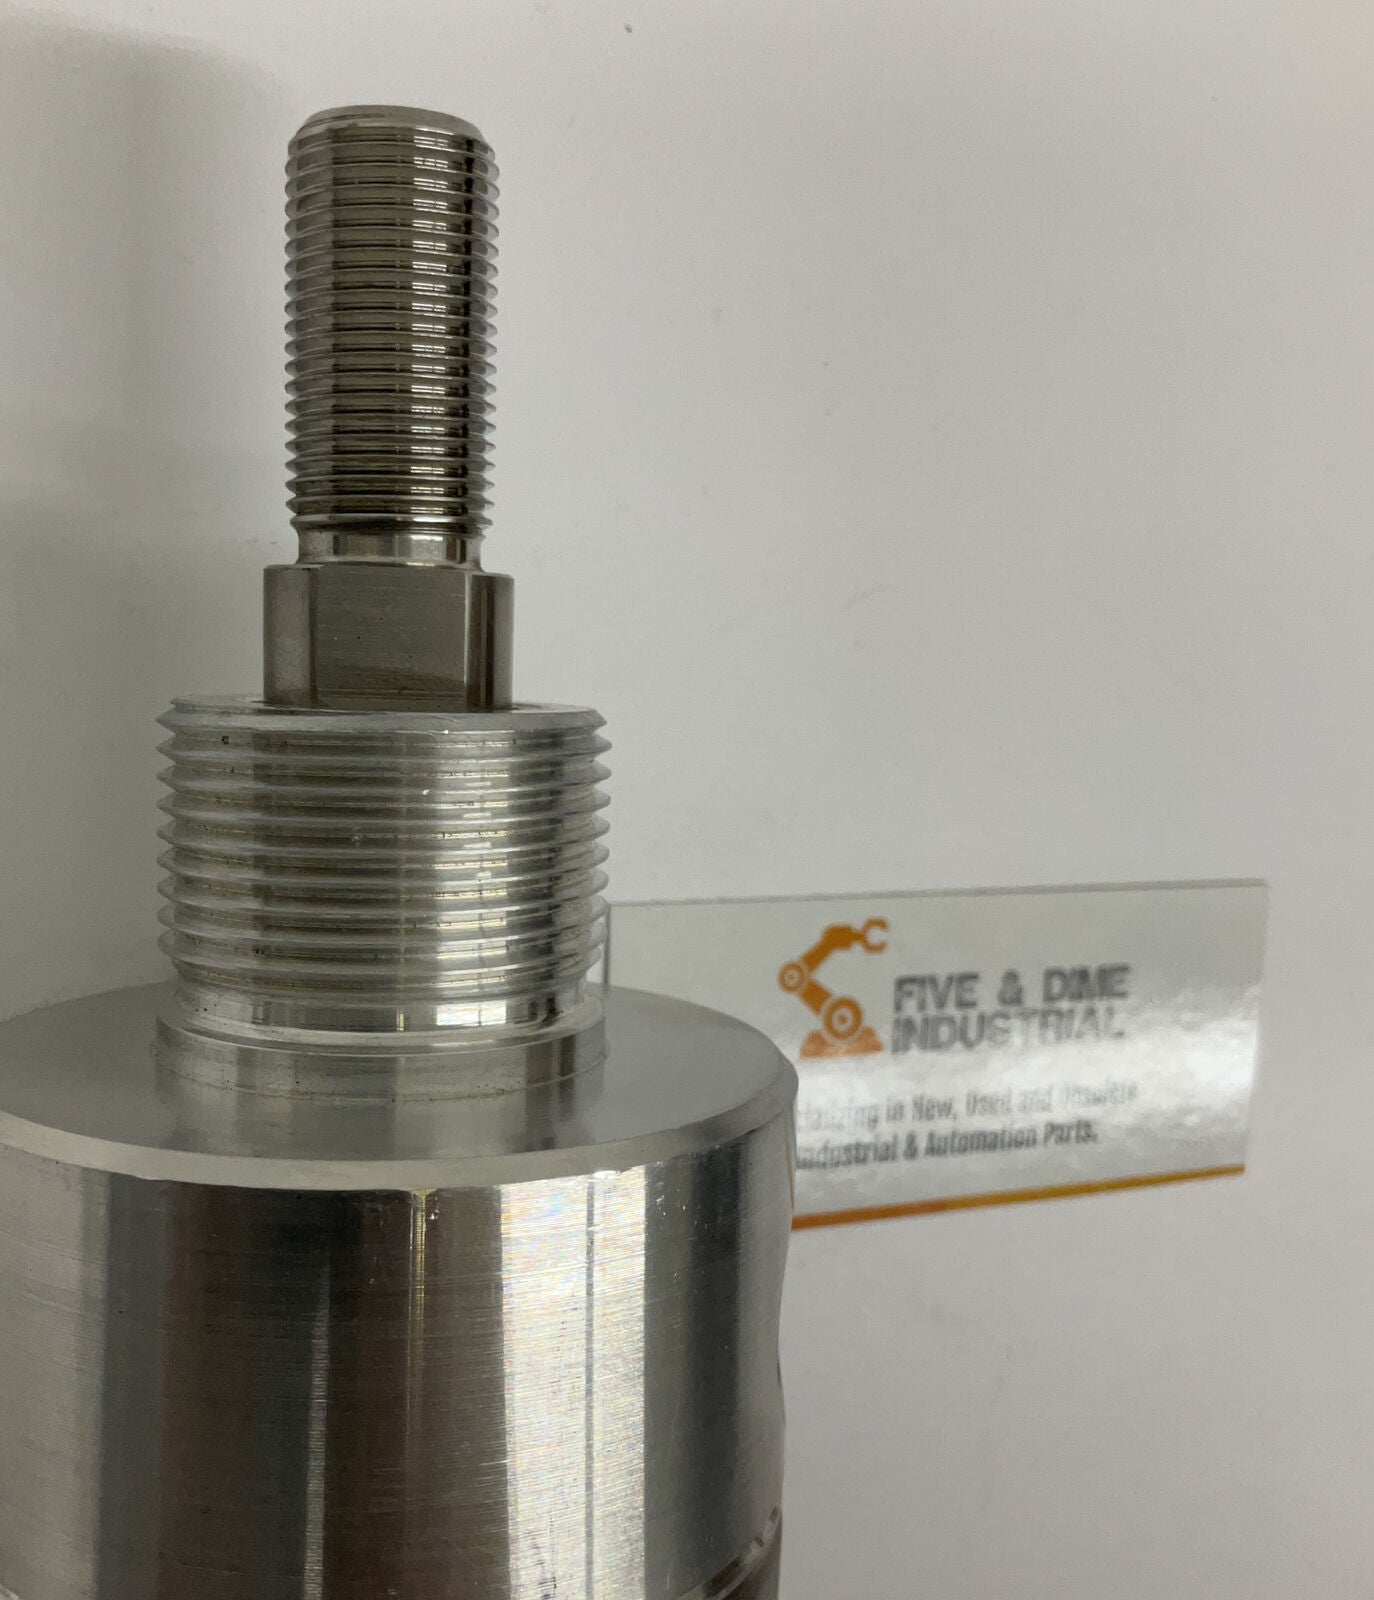 Bimba MRS-506-DXP Pneumatic Cylinder 2-1/2" Bore 6" Stroke (OV116)